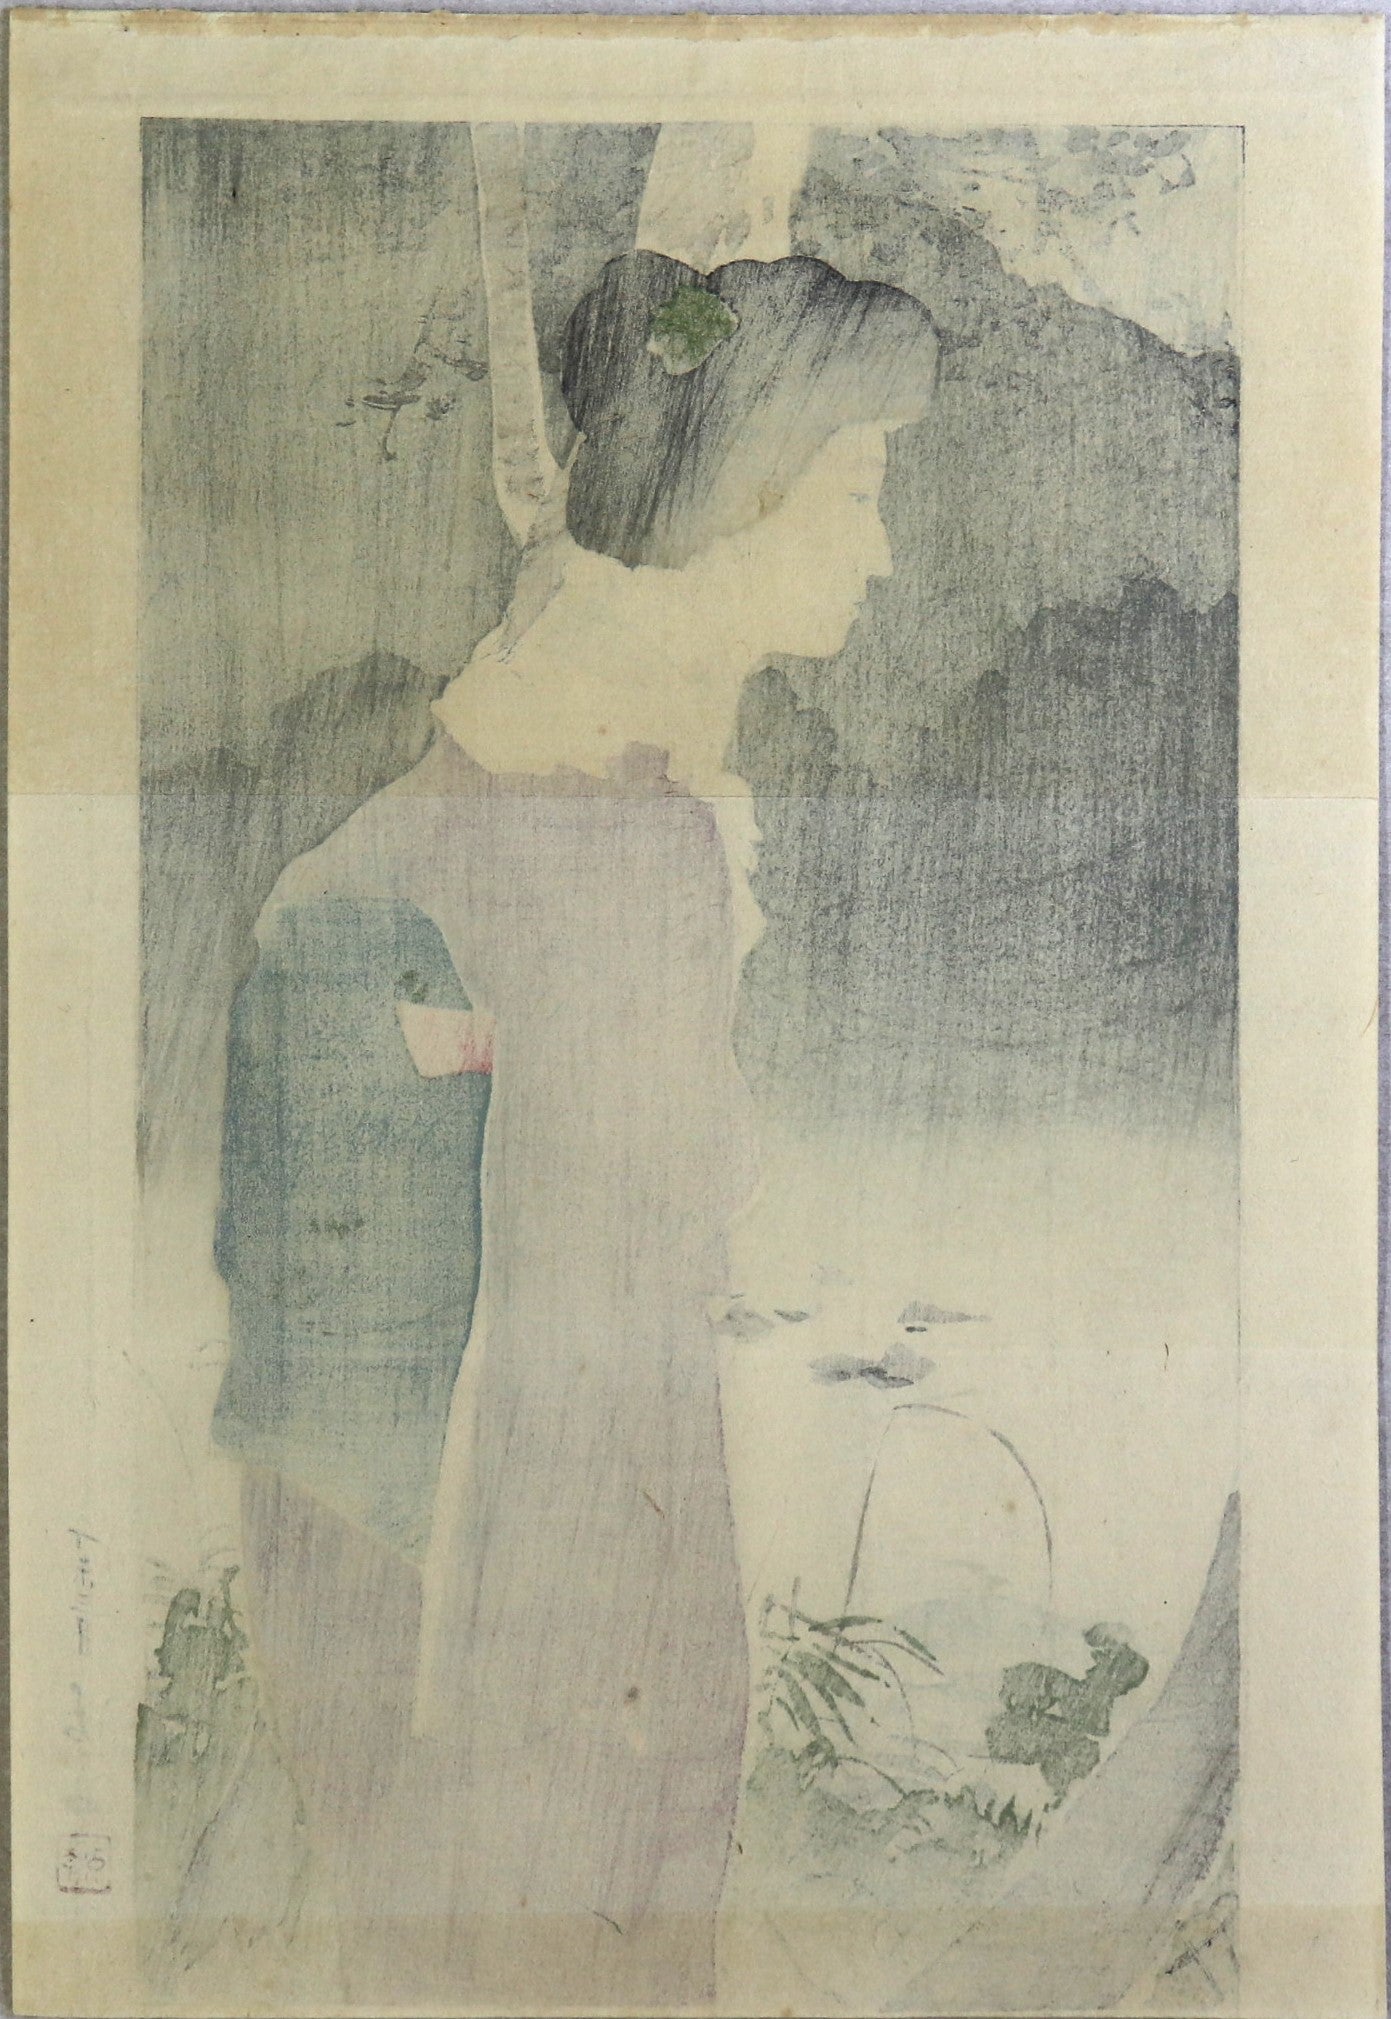 Totsugabuchi by Kiyokata (1907)